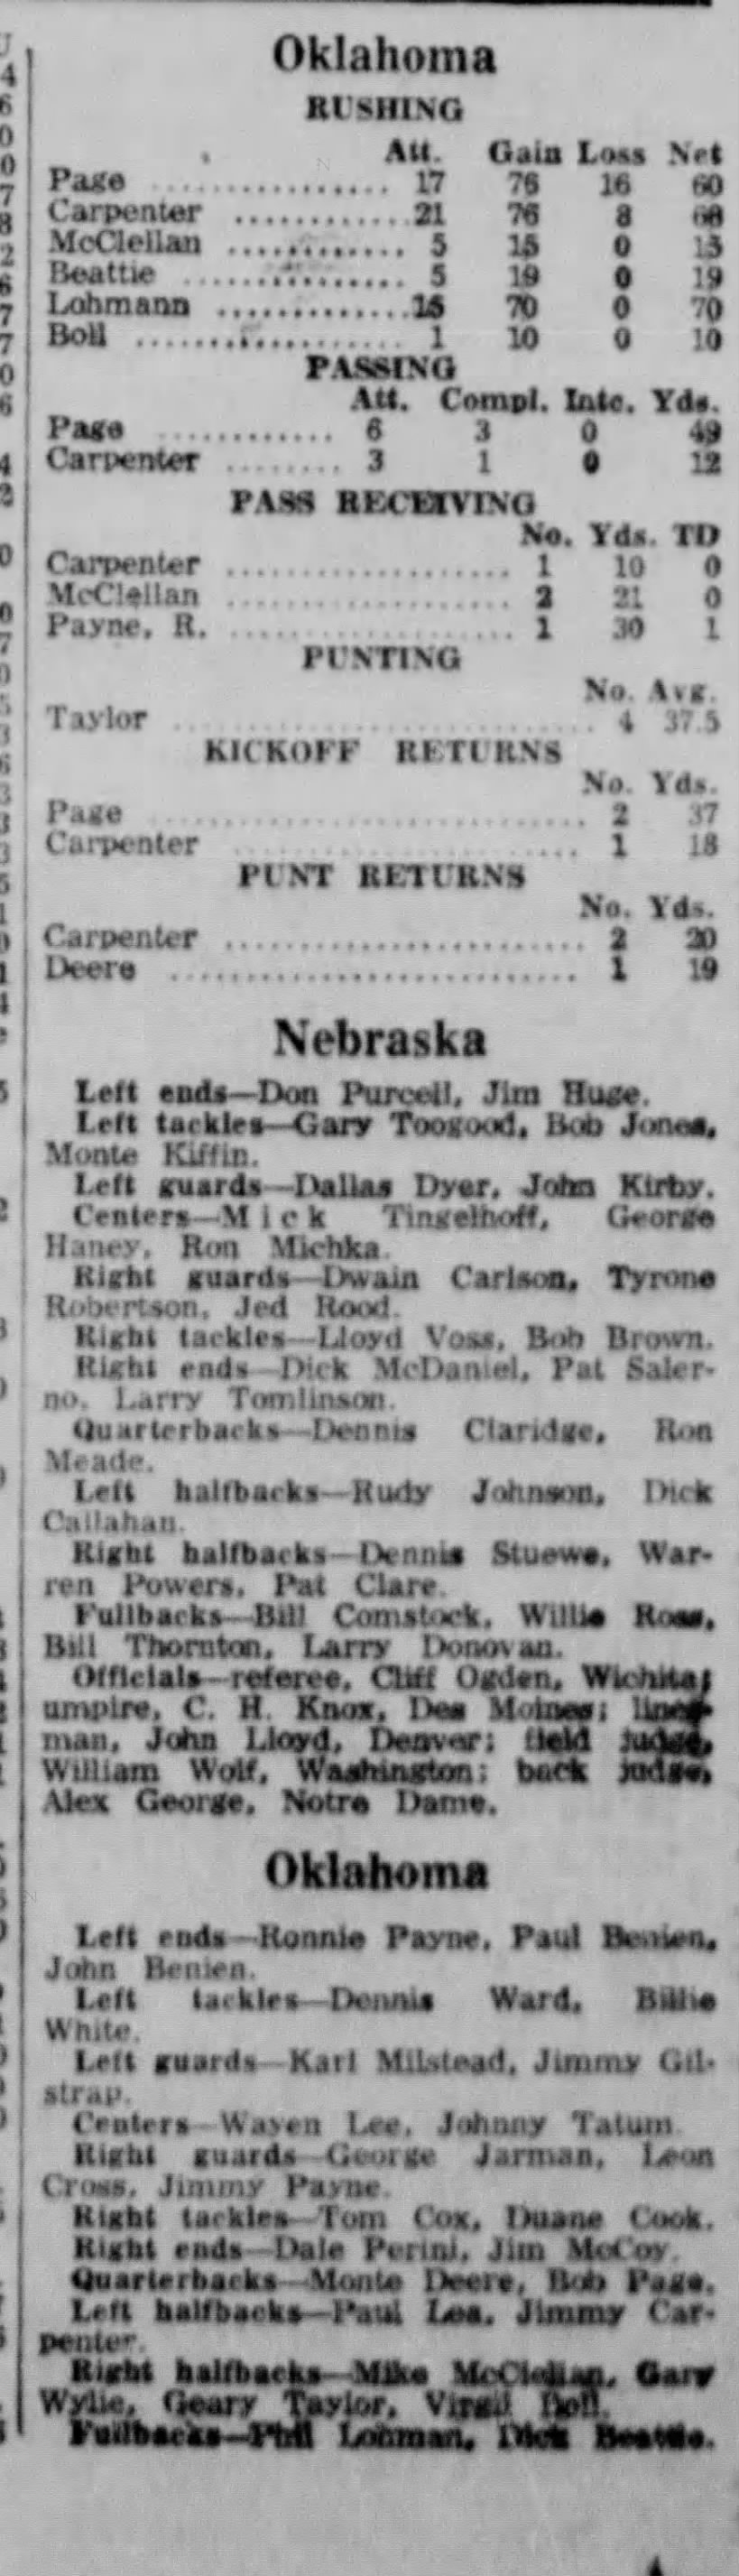 1961 Nebraska-Oklahoma stats part 2